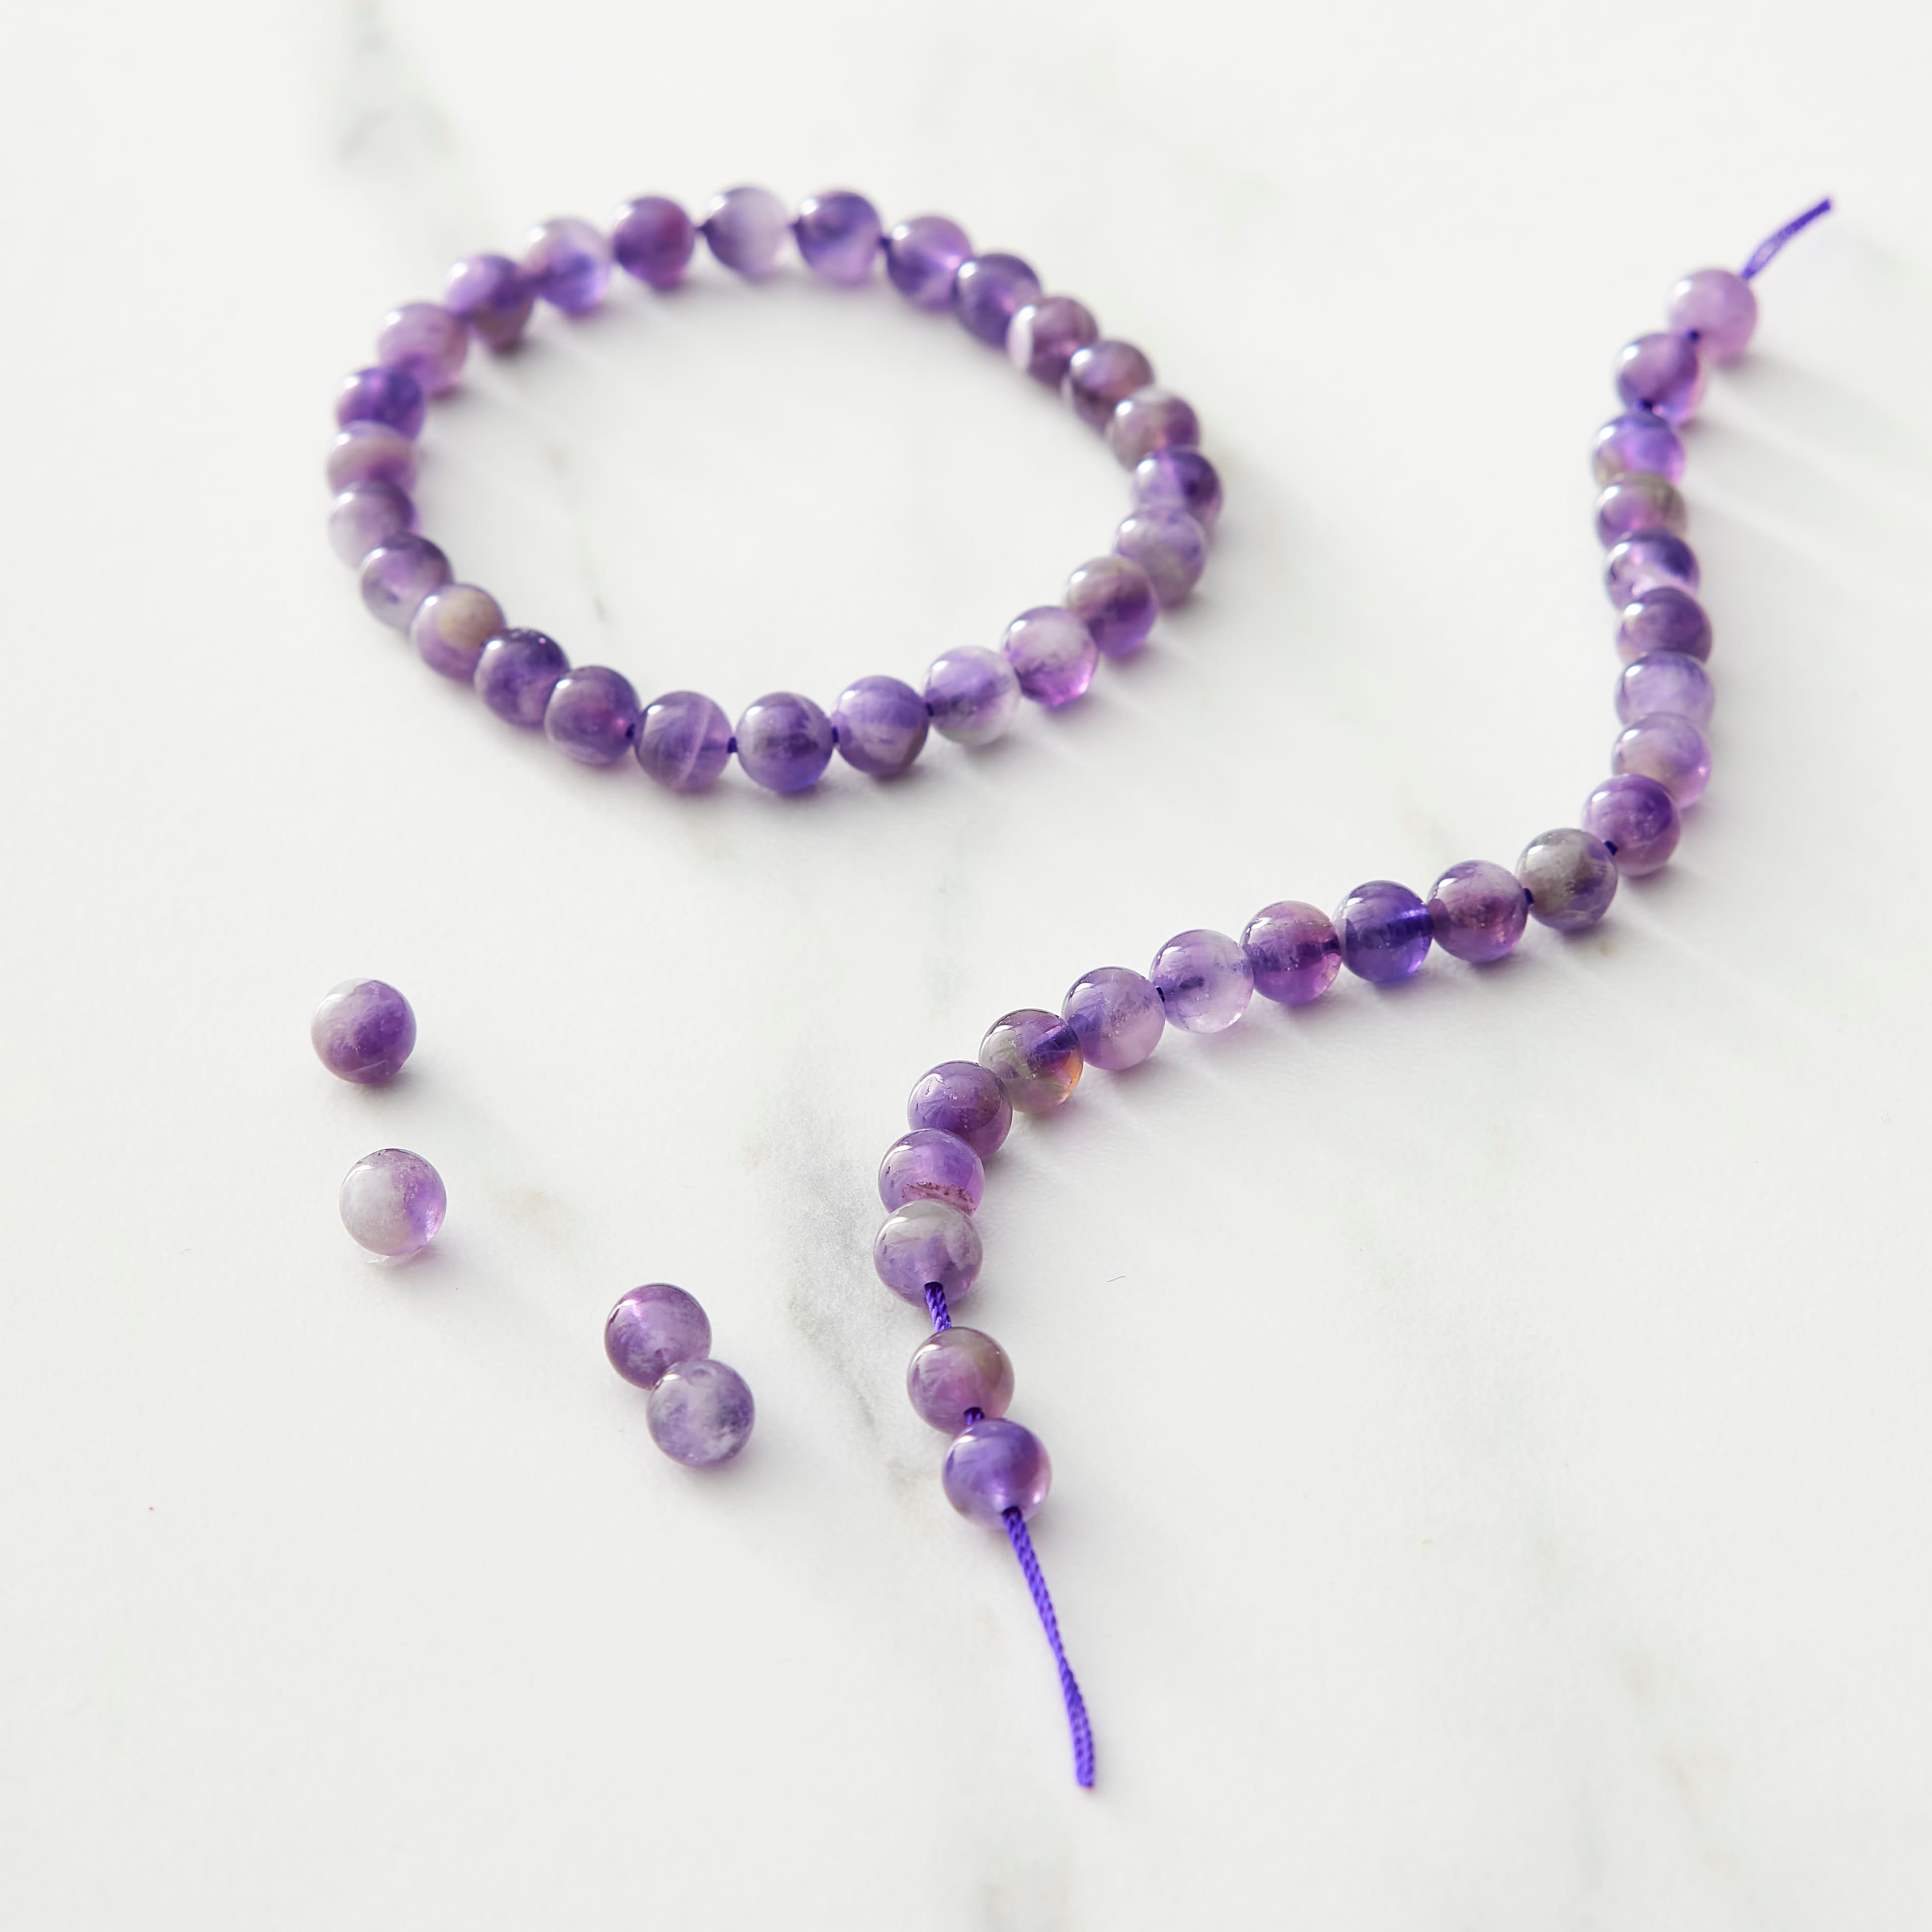 Bead Gallery 6mm Purple Amethyst Round Beads - Each